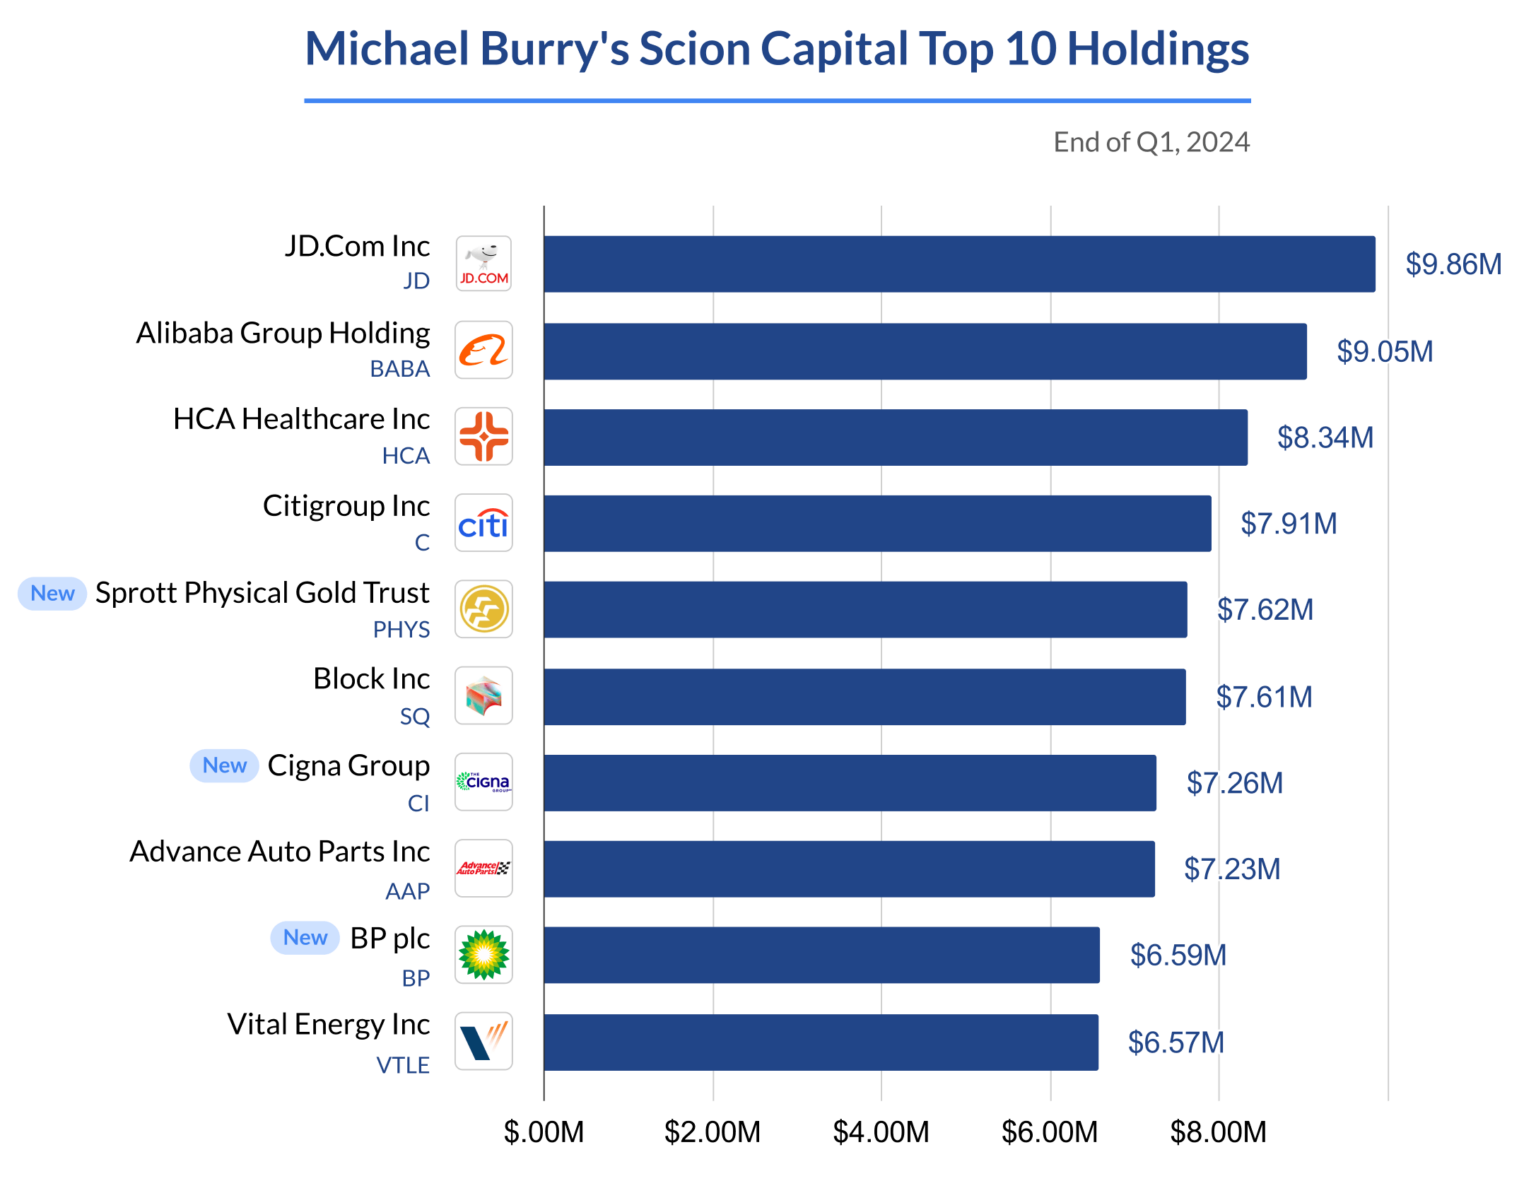 Michael Burry Scion Capital Top Holdings Q1 2024